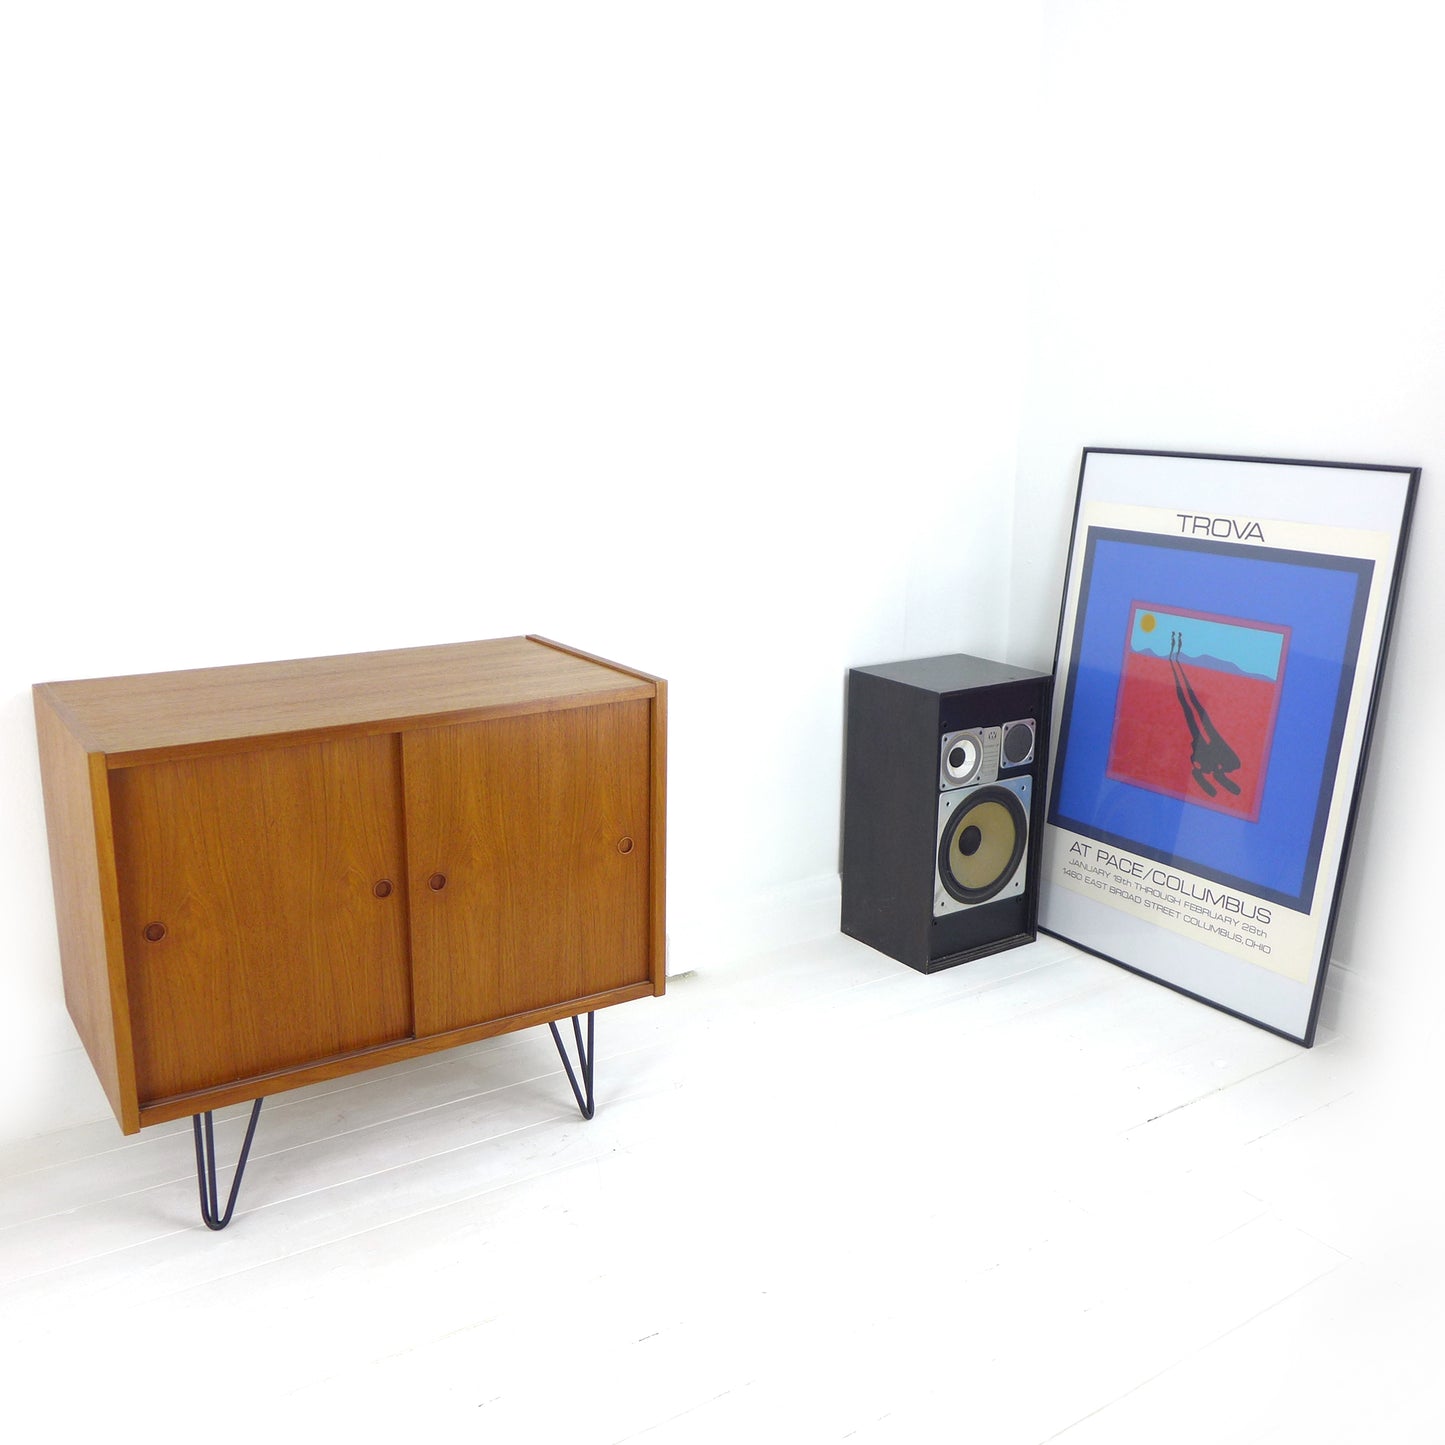 Danish Mid Century Teak Sideboard on Hairpin Legs - Record / Drinks Cabinet / TV Stand Vintage